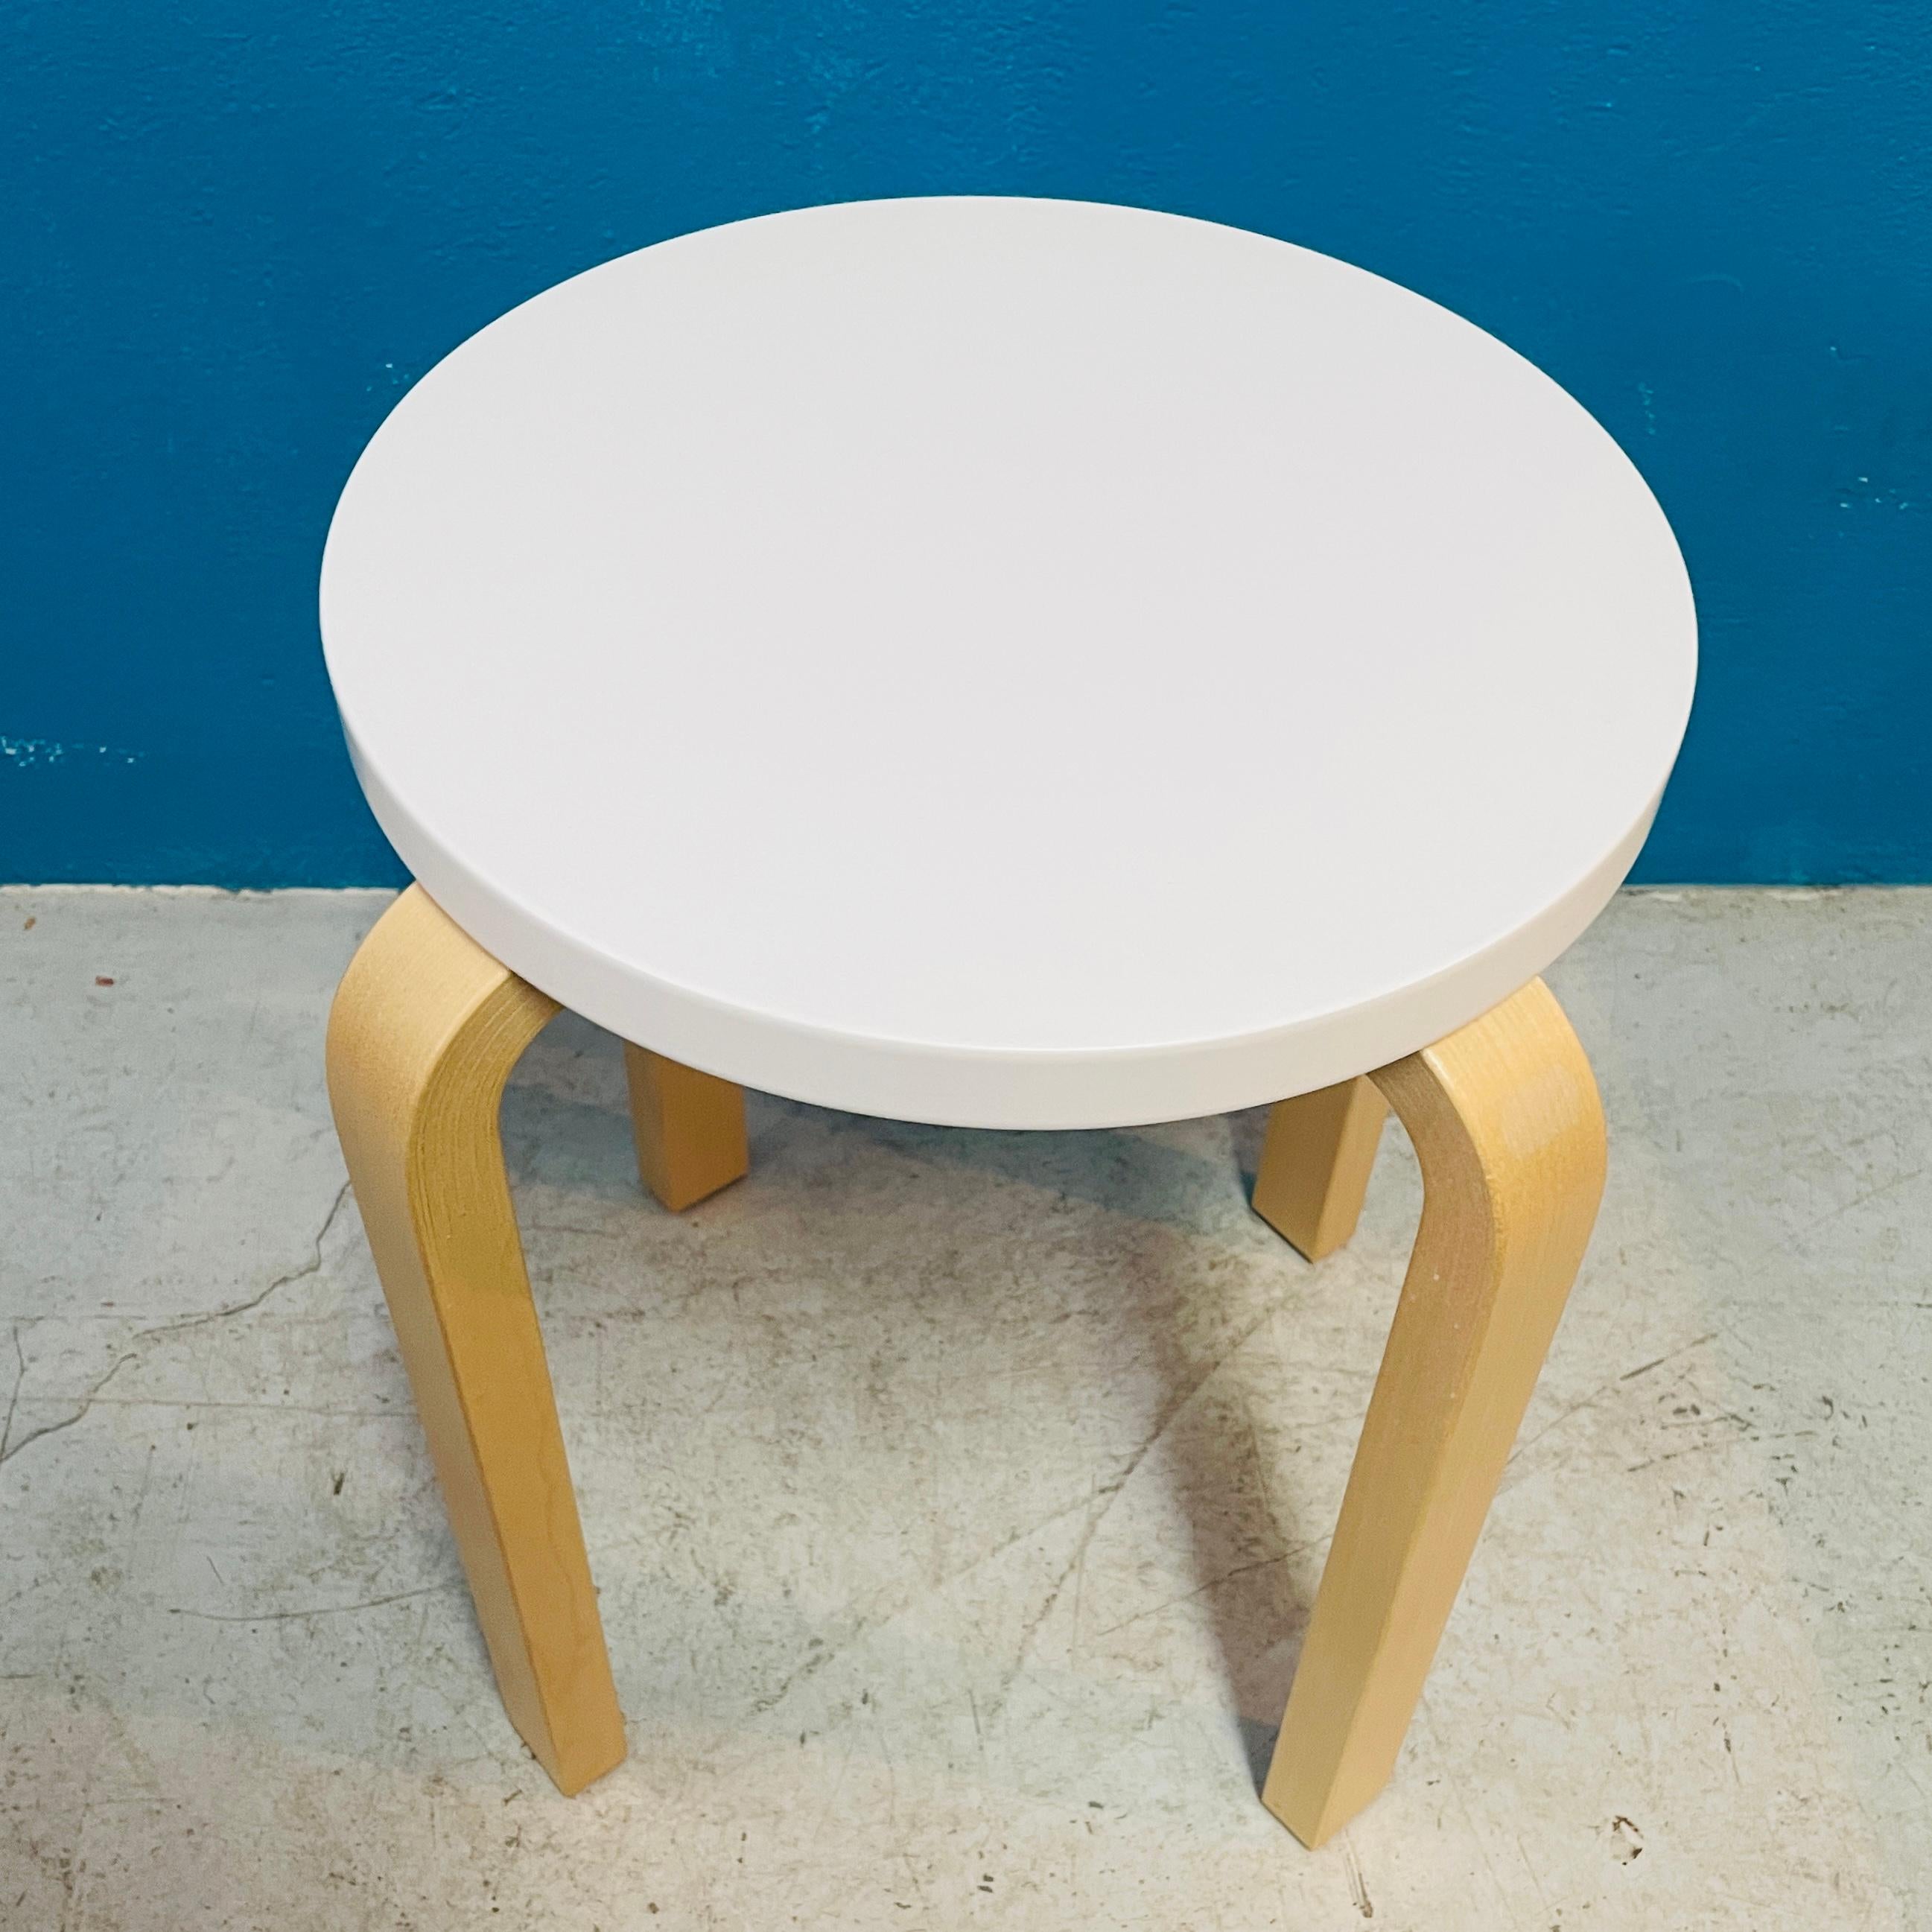 finnish stool